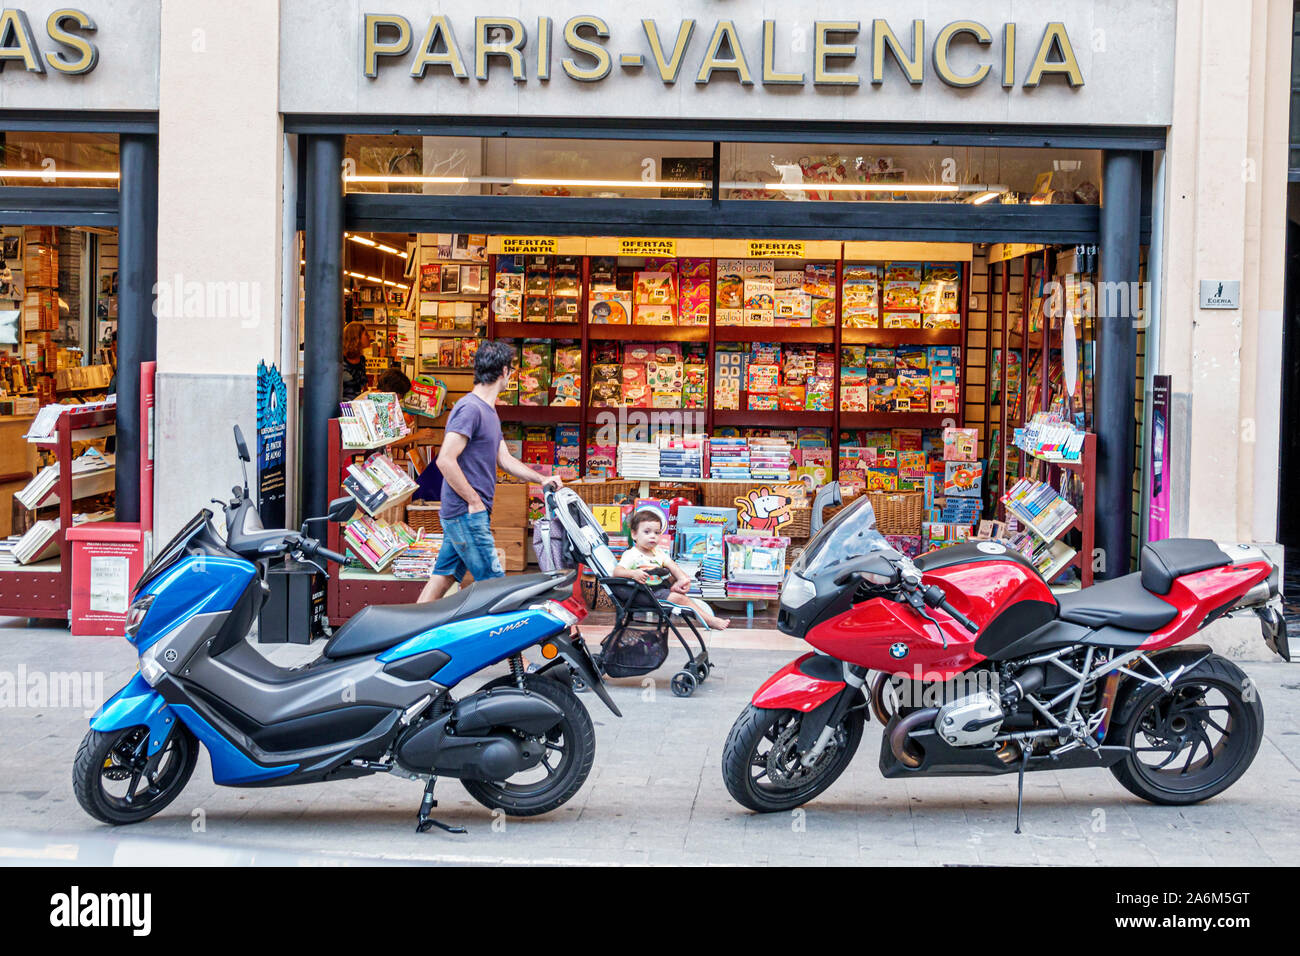 Valencia Spain,Ciutat Vella,old city,historic center,Plaza Alfonso El Magnanimo,Librerias Paris-Valencia,bookstore,exterior front entrance,motorcycles Stock Photo